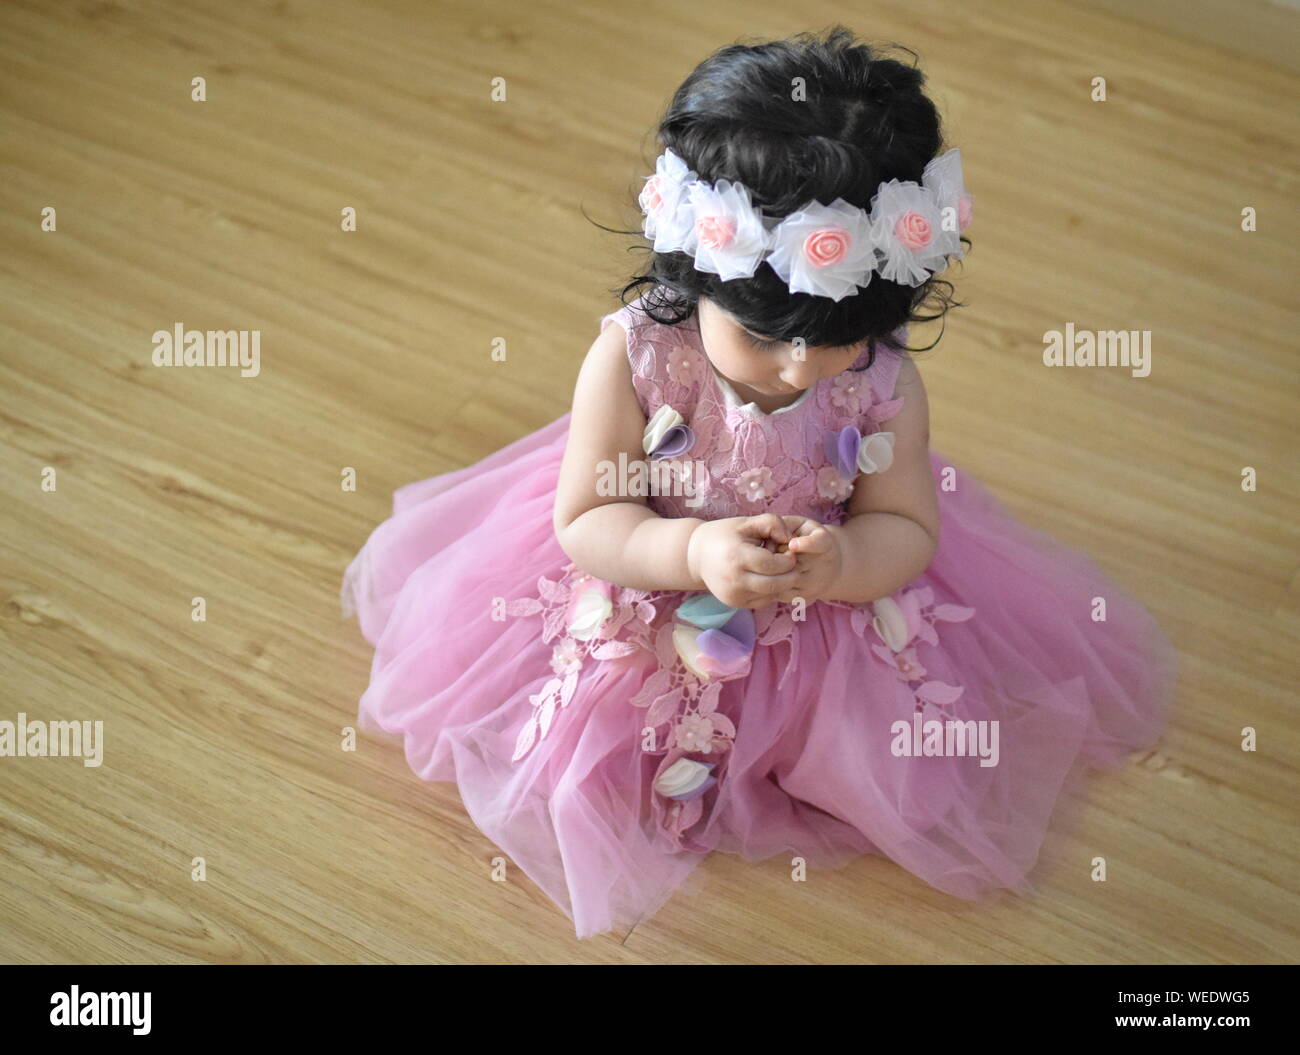 Cute baby girl in pink princess dress Stock Photo - Alamy